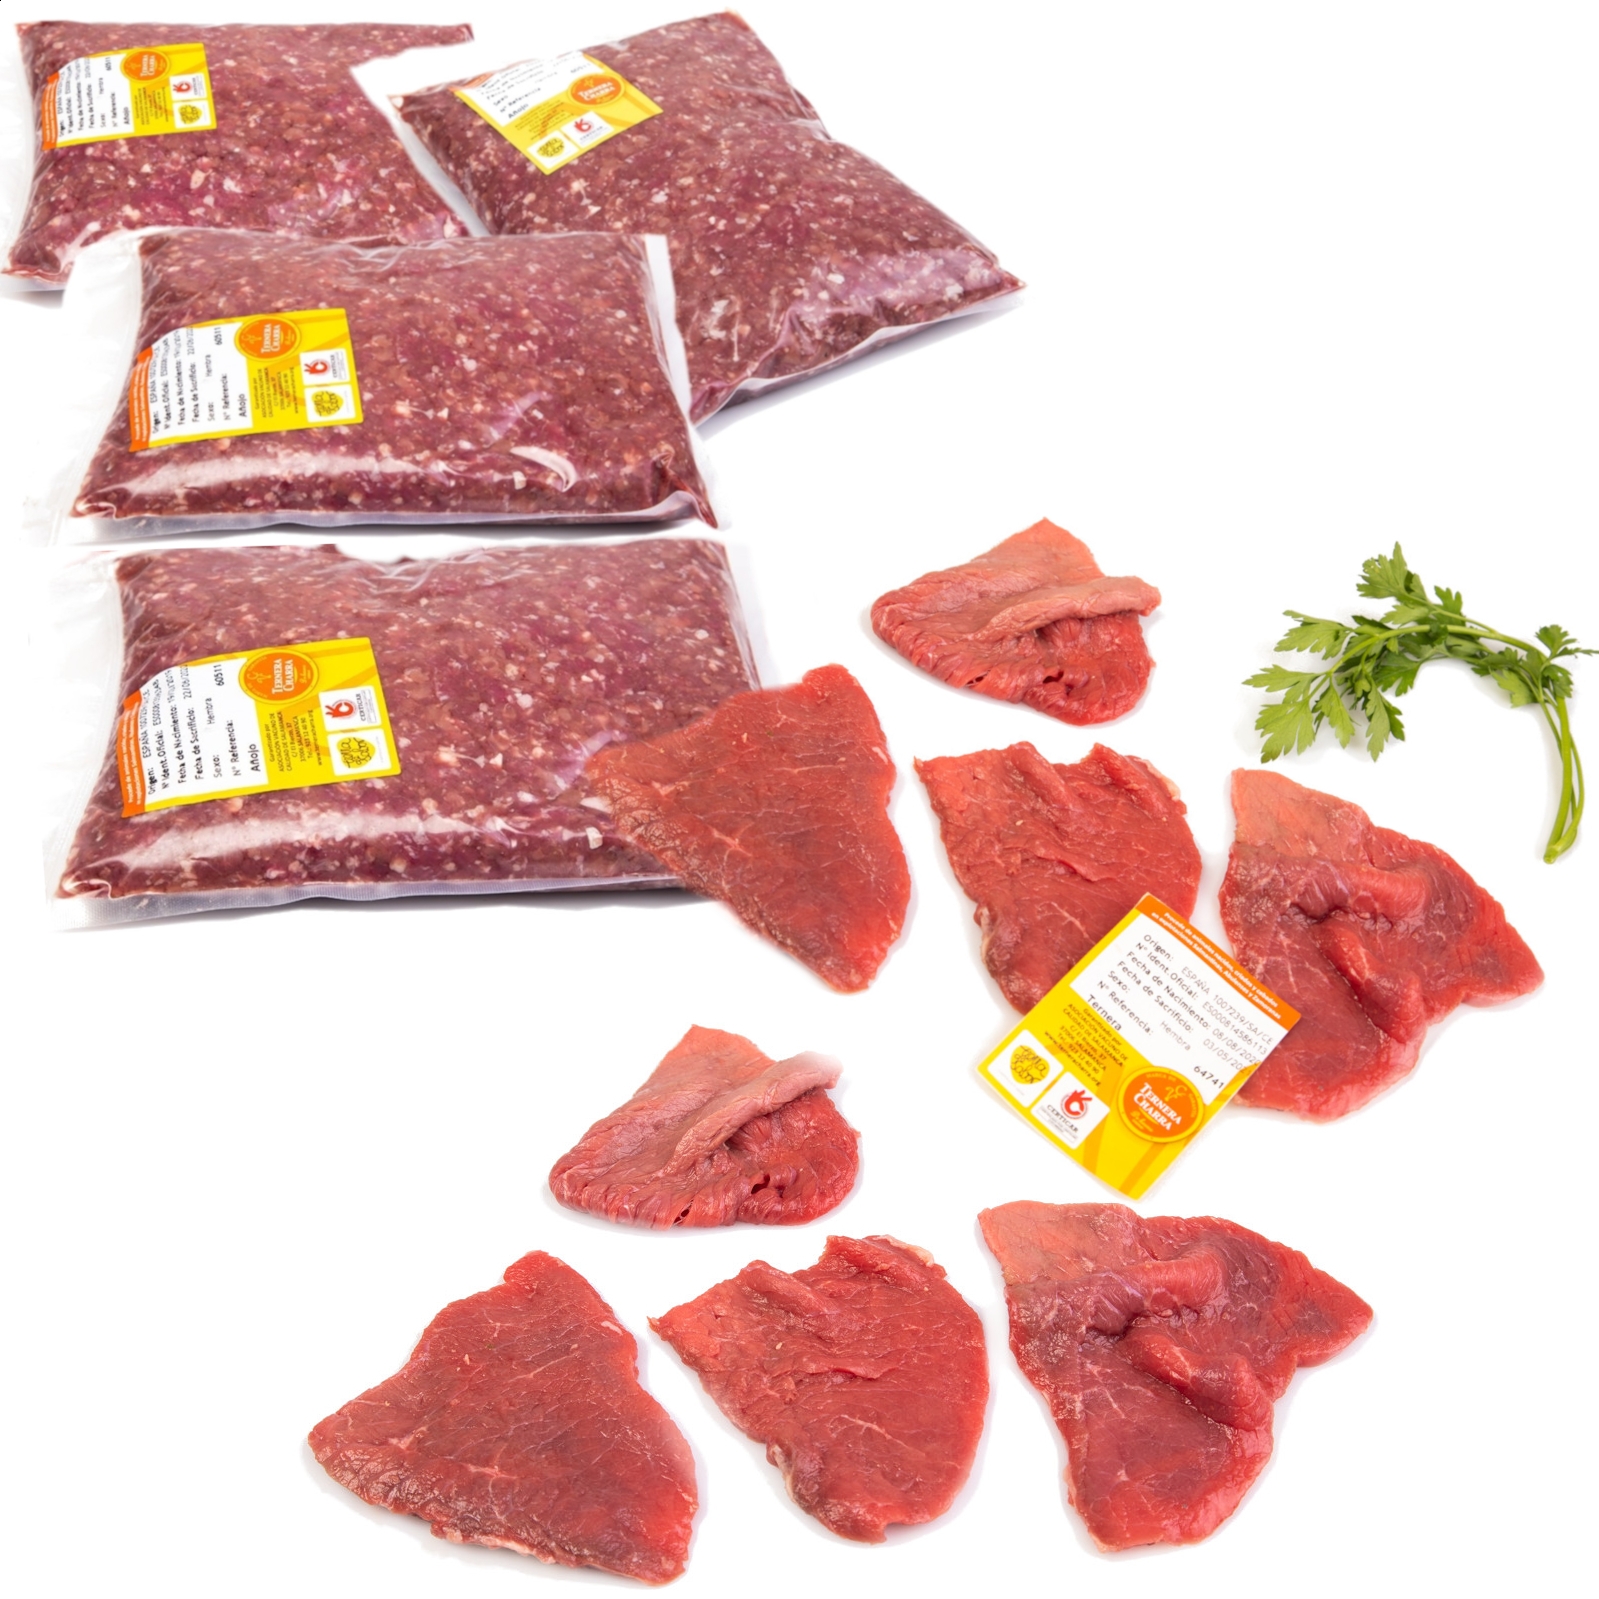 Carne picada de ternera (kg)